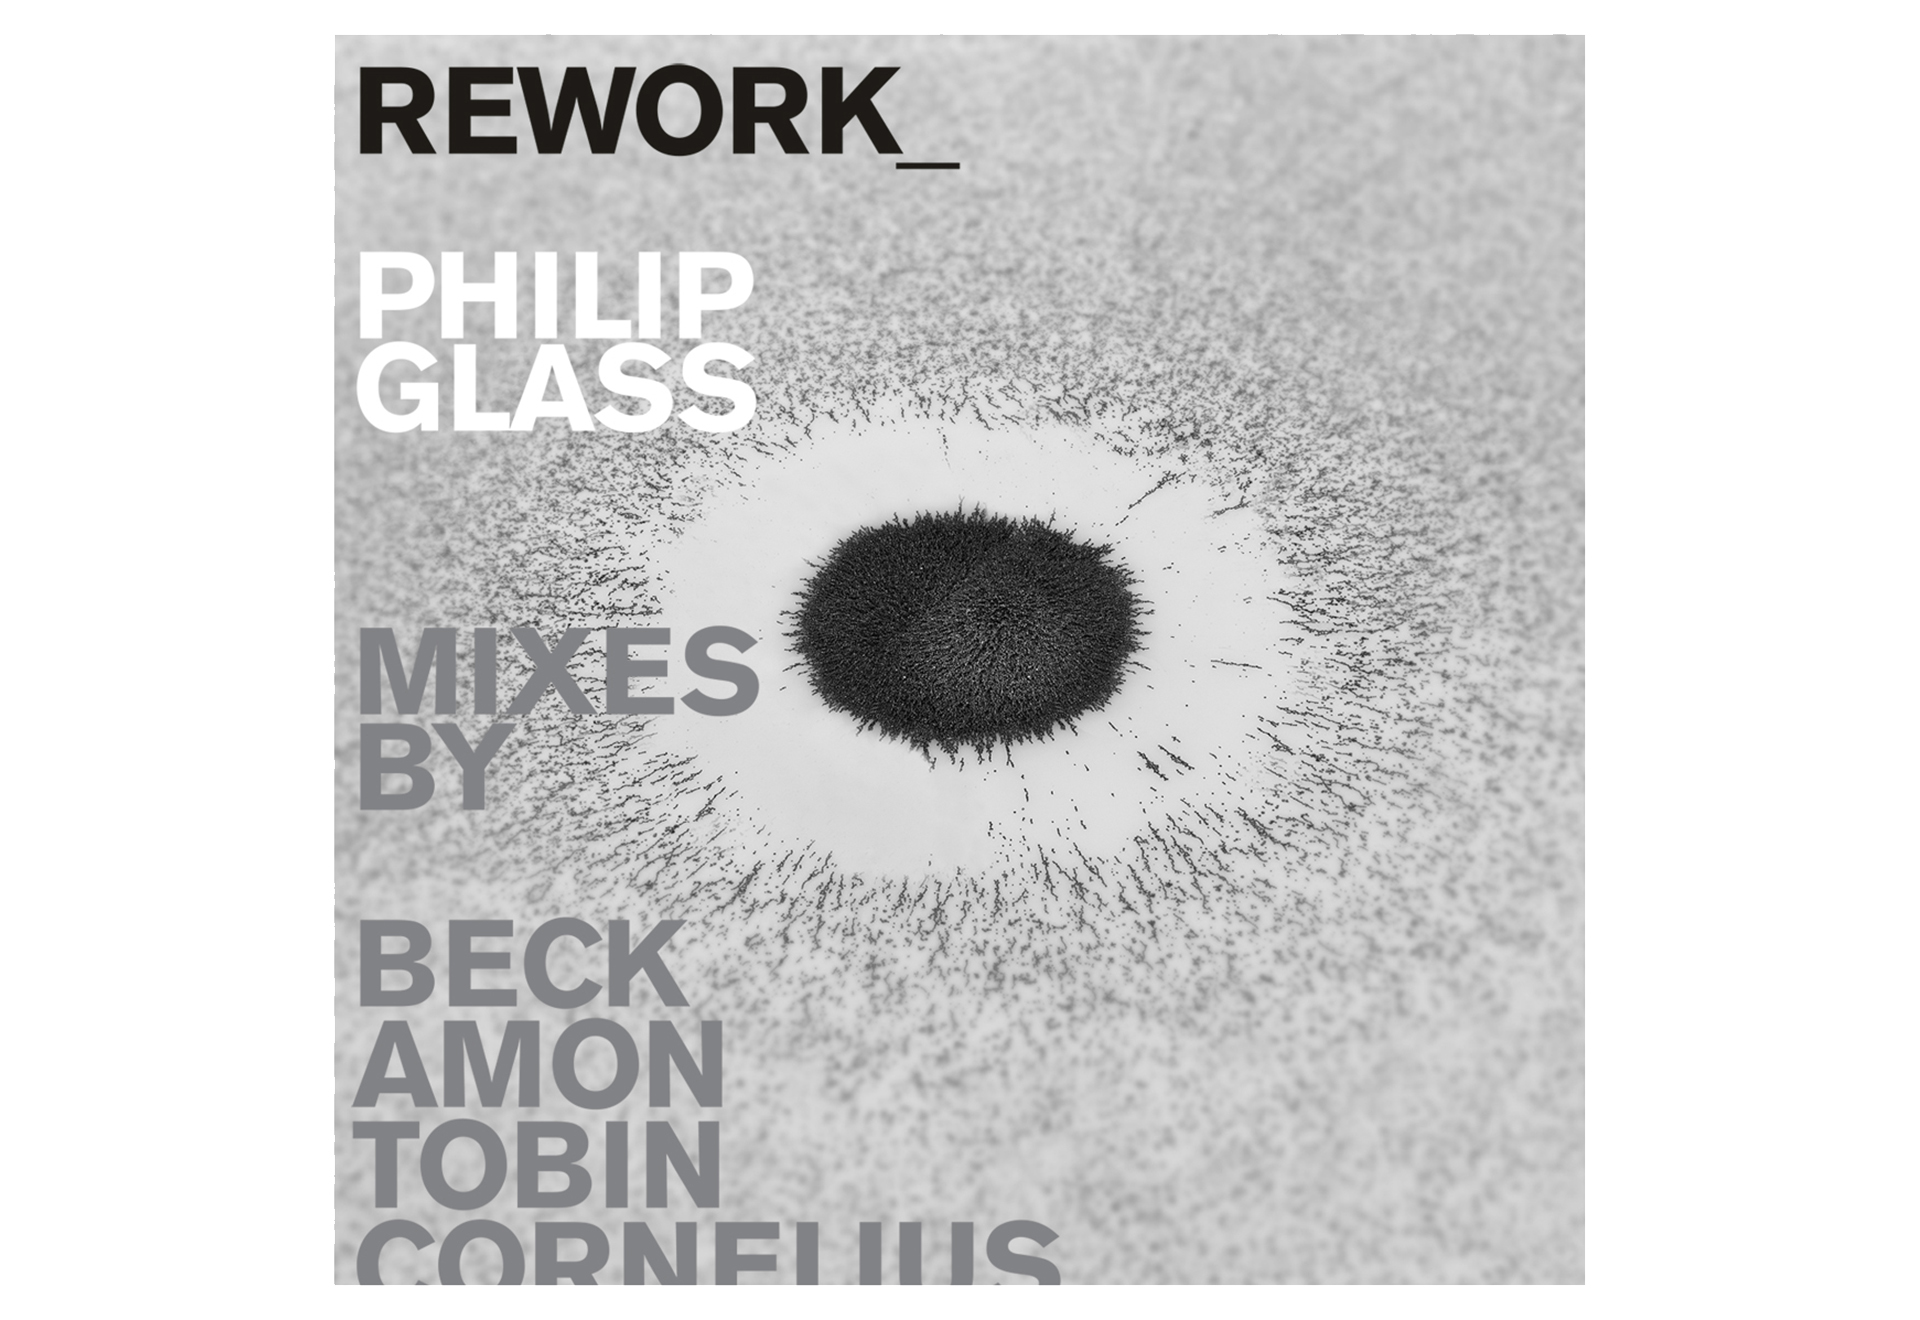 Phillip Glass mixes album art